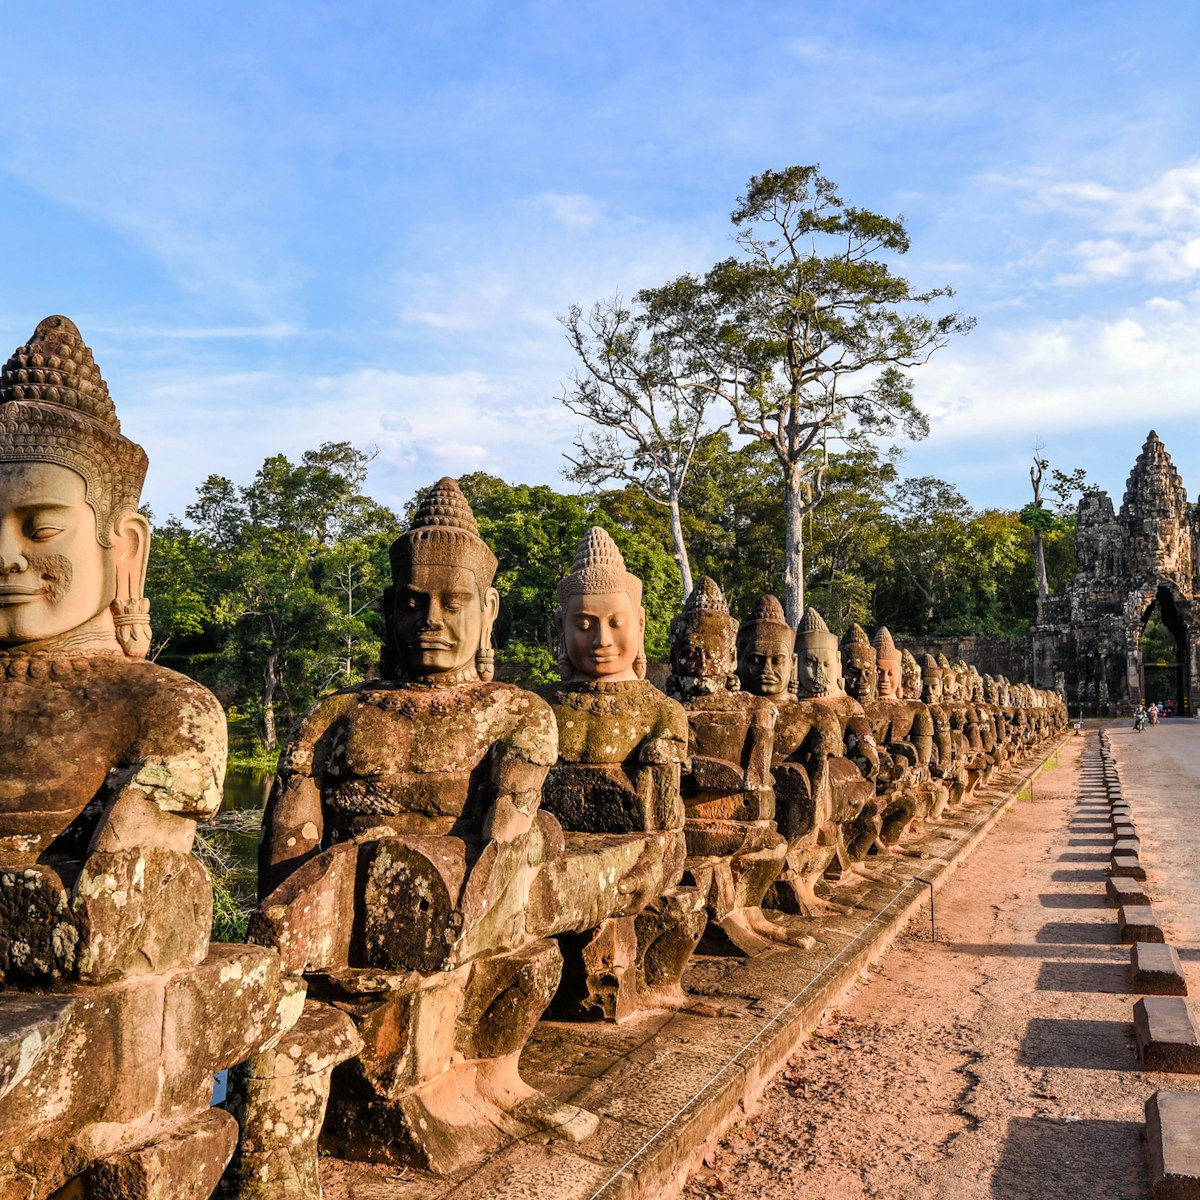 Taken in Angkor Wat in Cambodia.